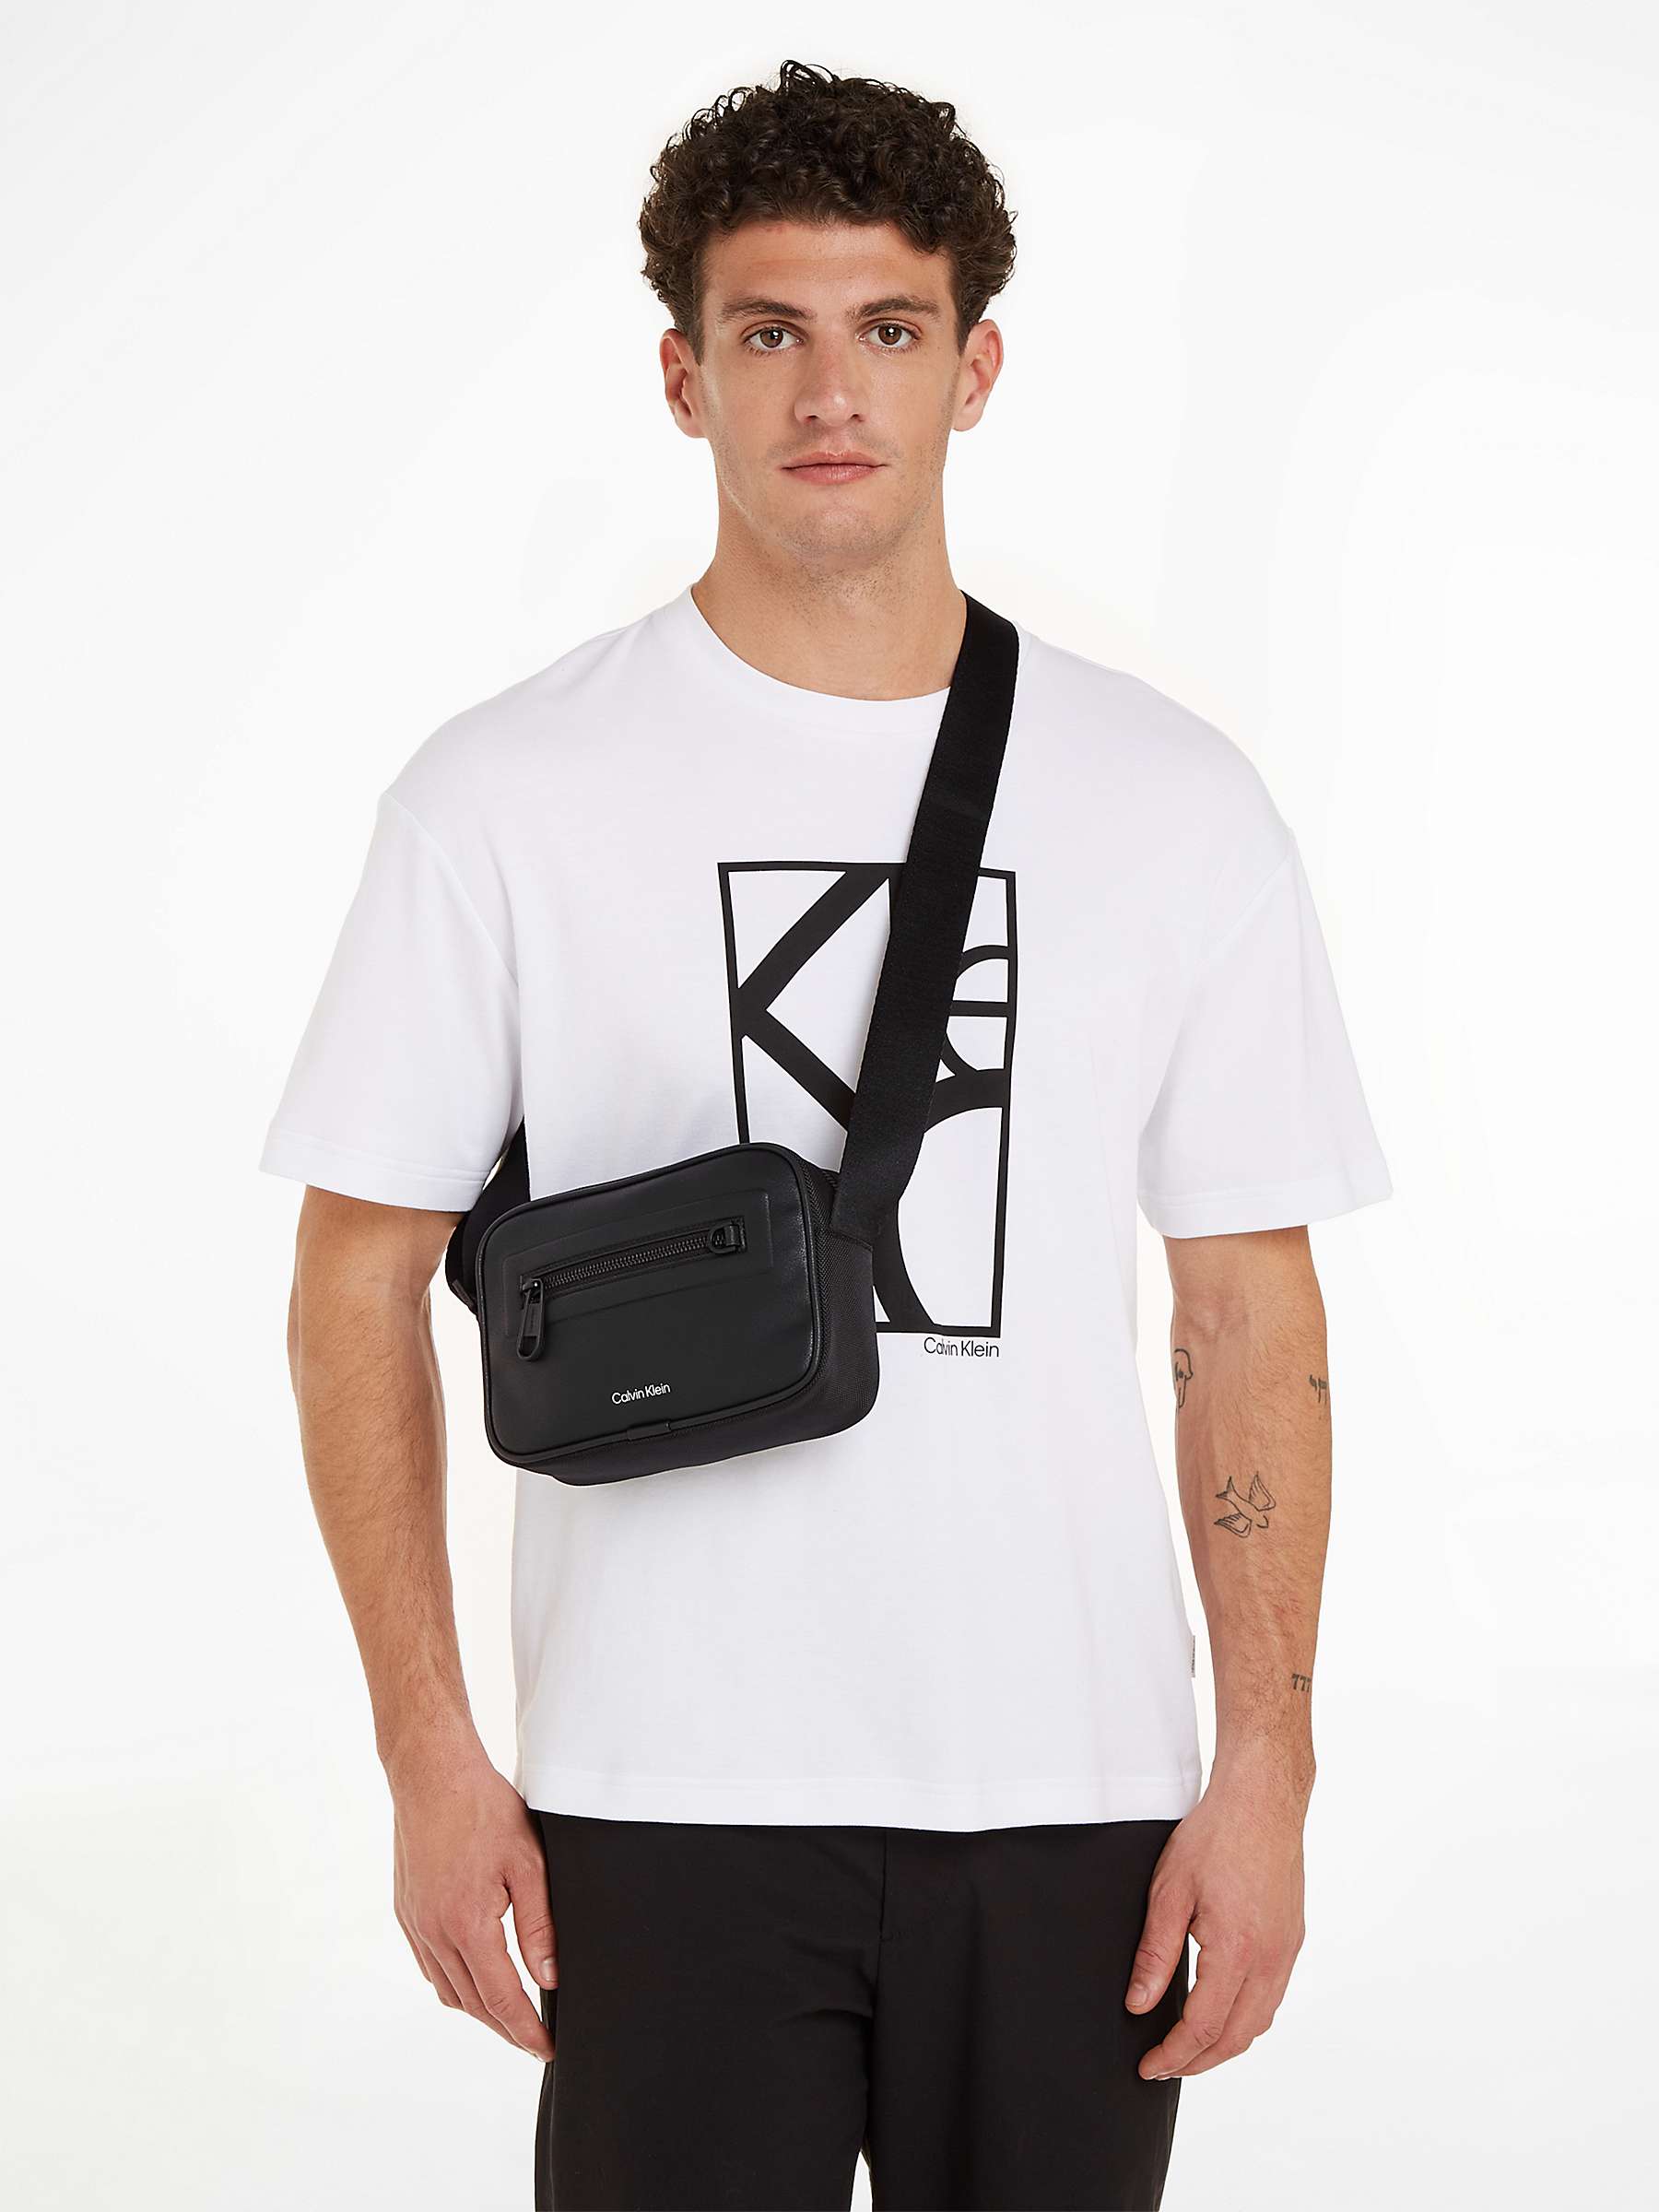 Buy Calvin Klein Elevated Camera Bag, Black Online at johnlewis.com